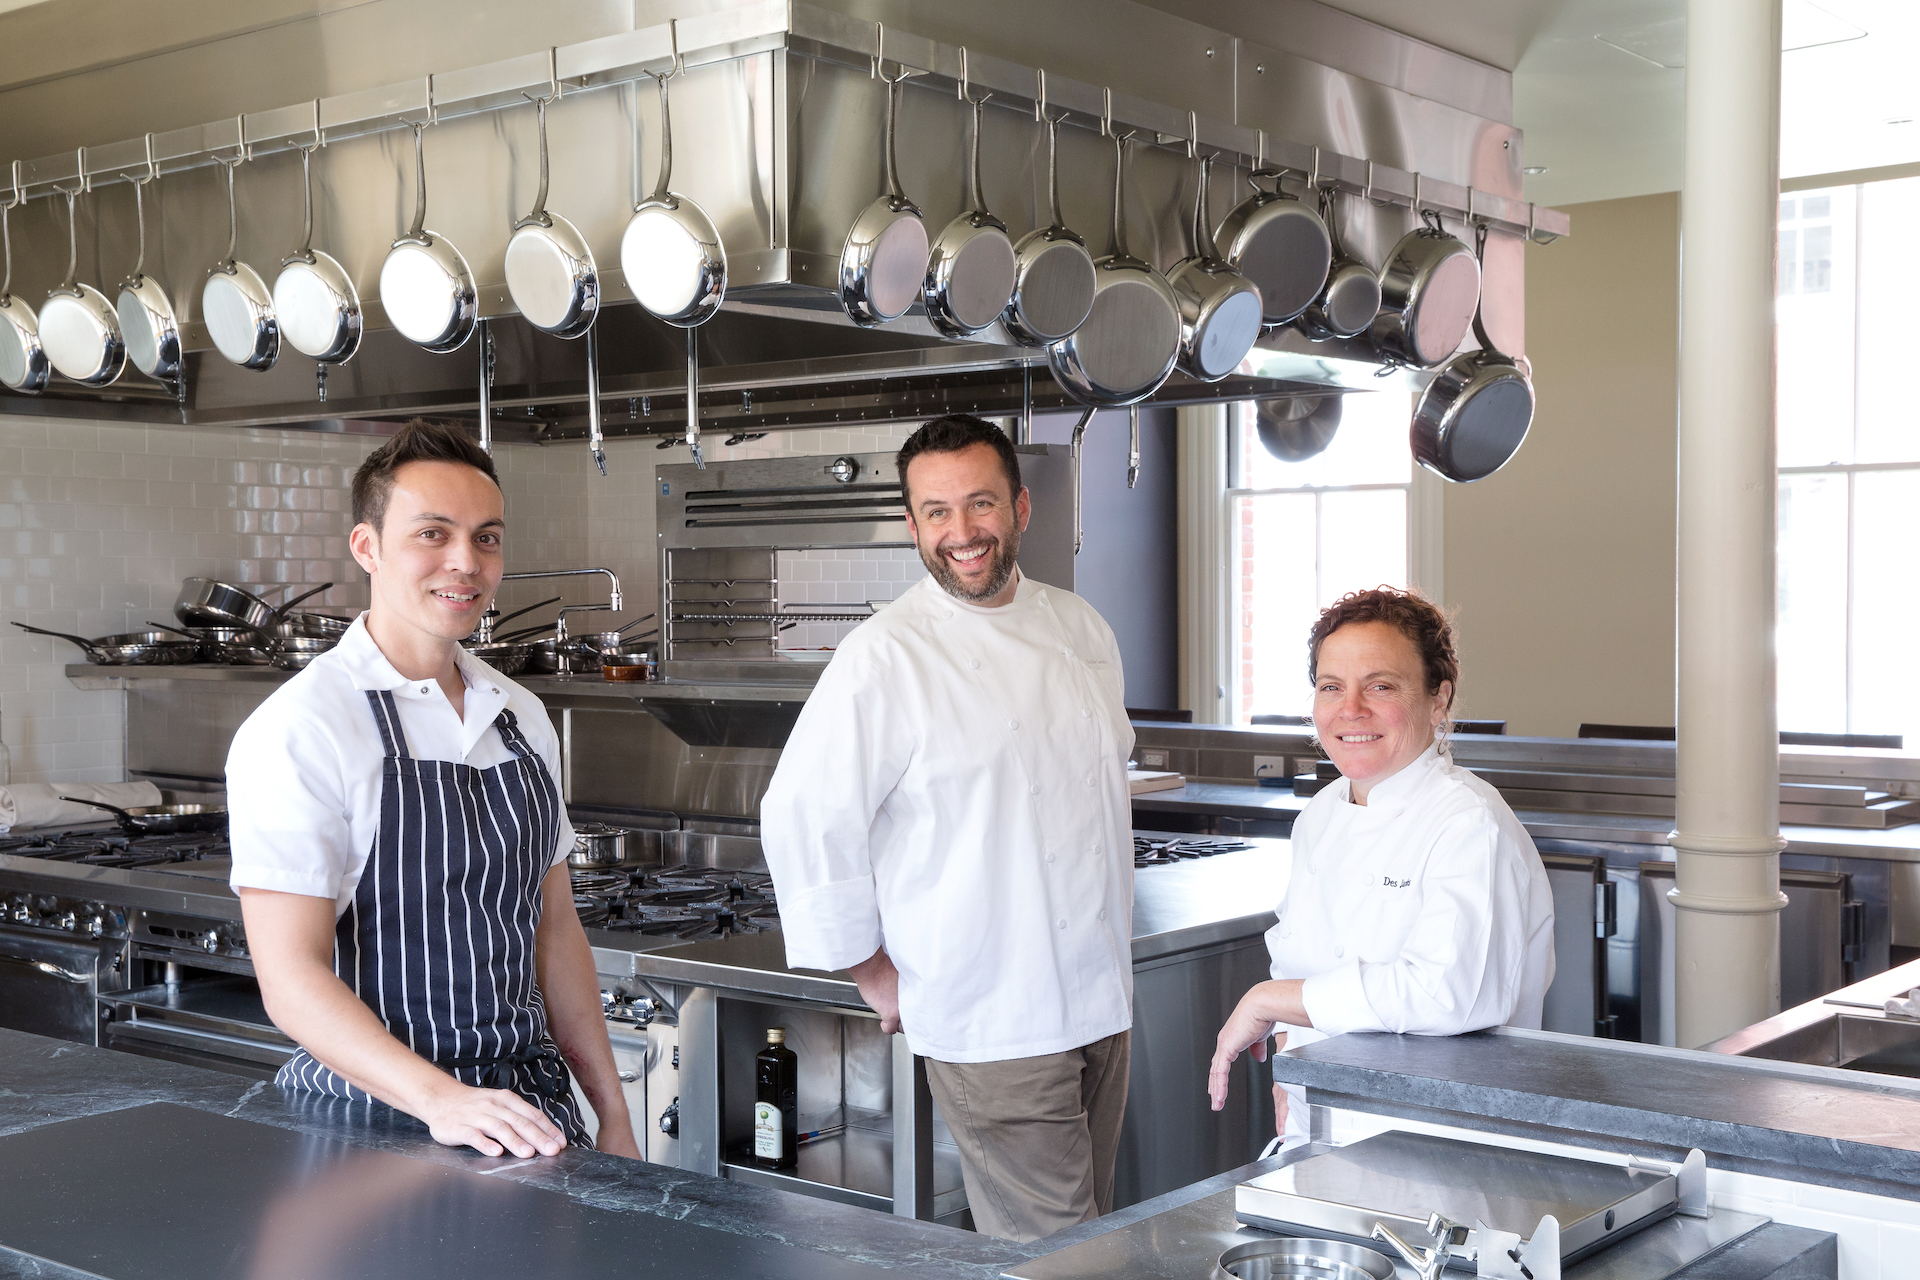 Left to right: Chefs Reylon Agustin, Robbie Lewis and Traci Des Jardins